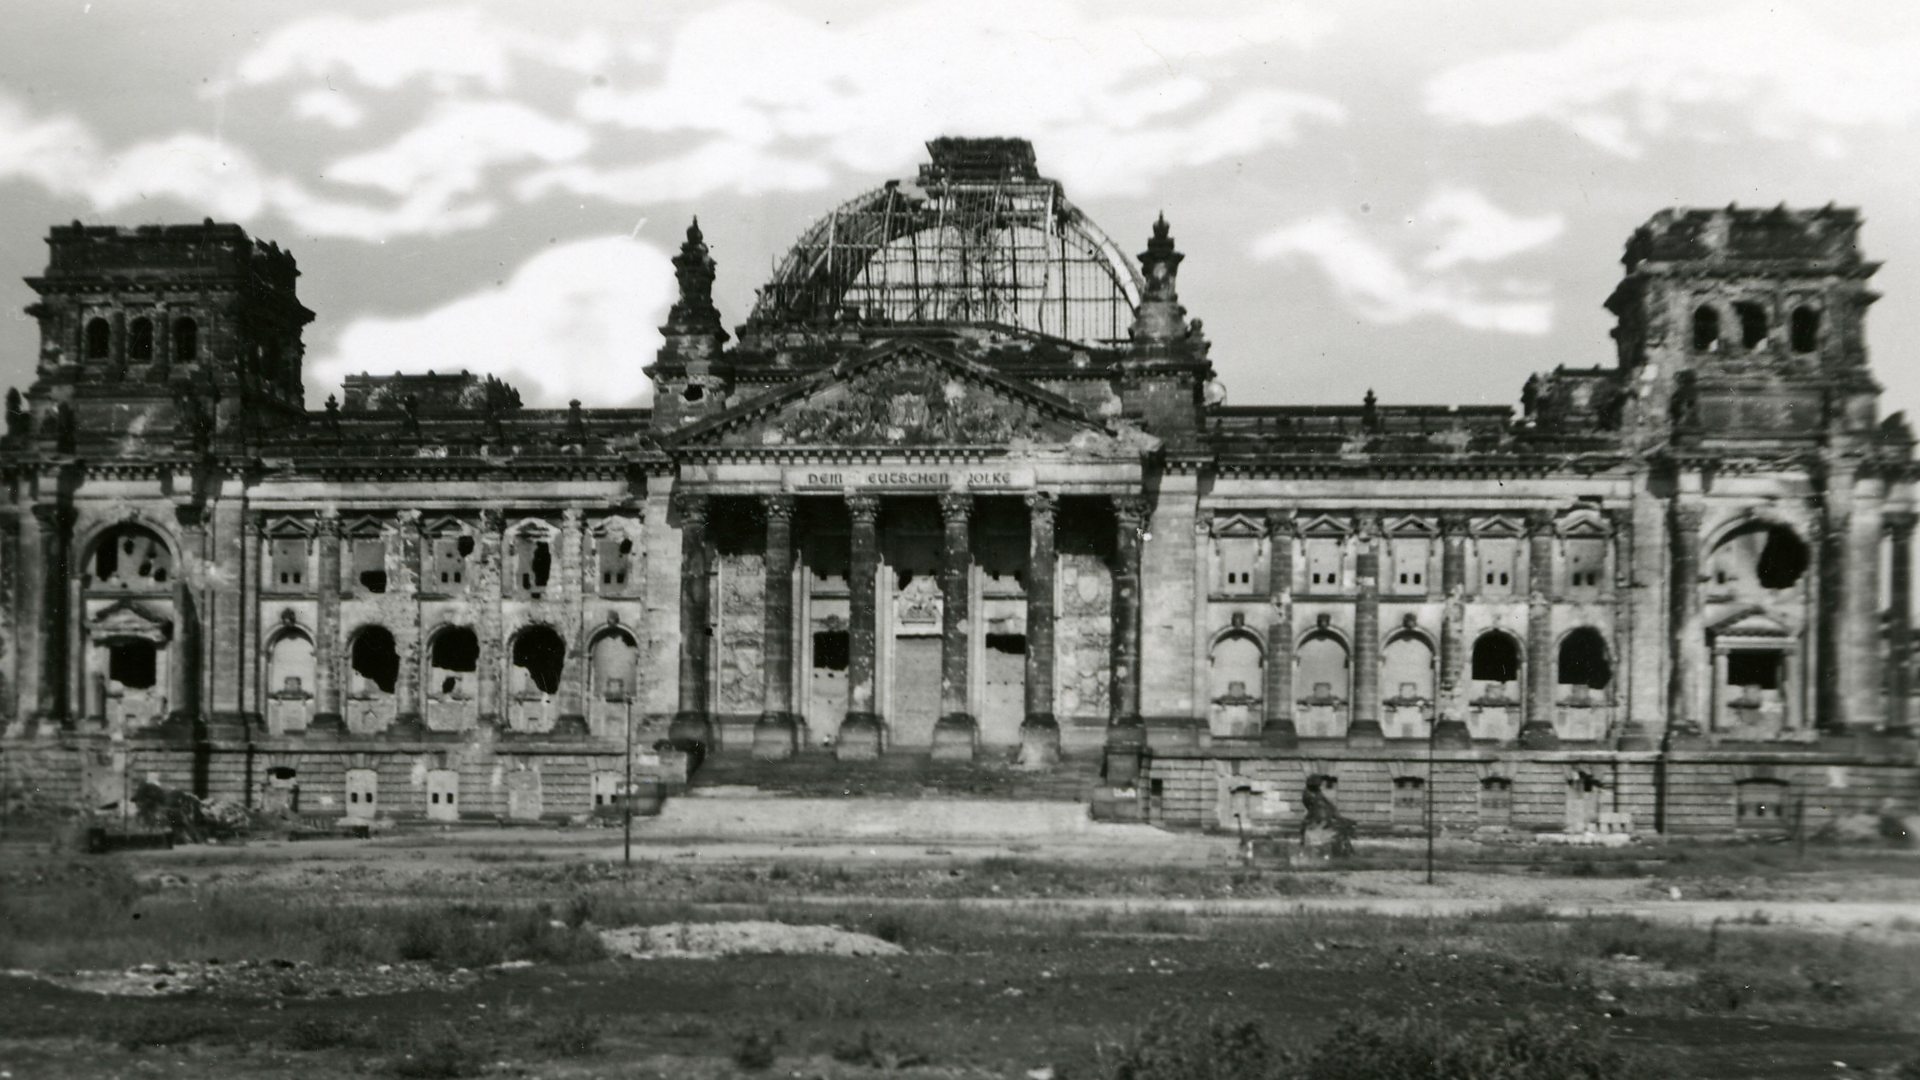 Hitler's helper? Reichstag fire 85 years on - BBC News